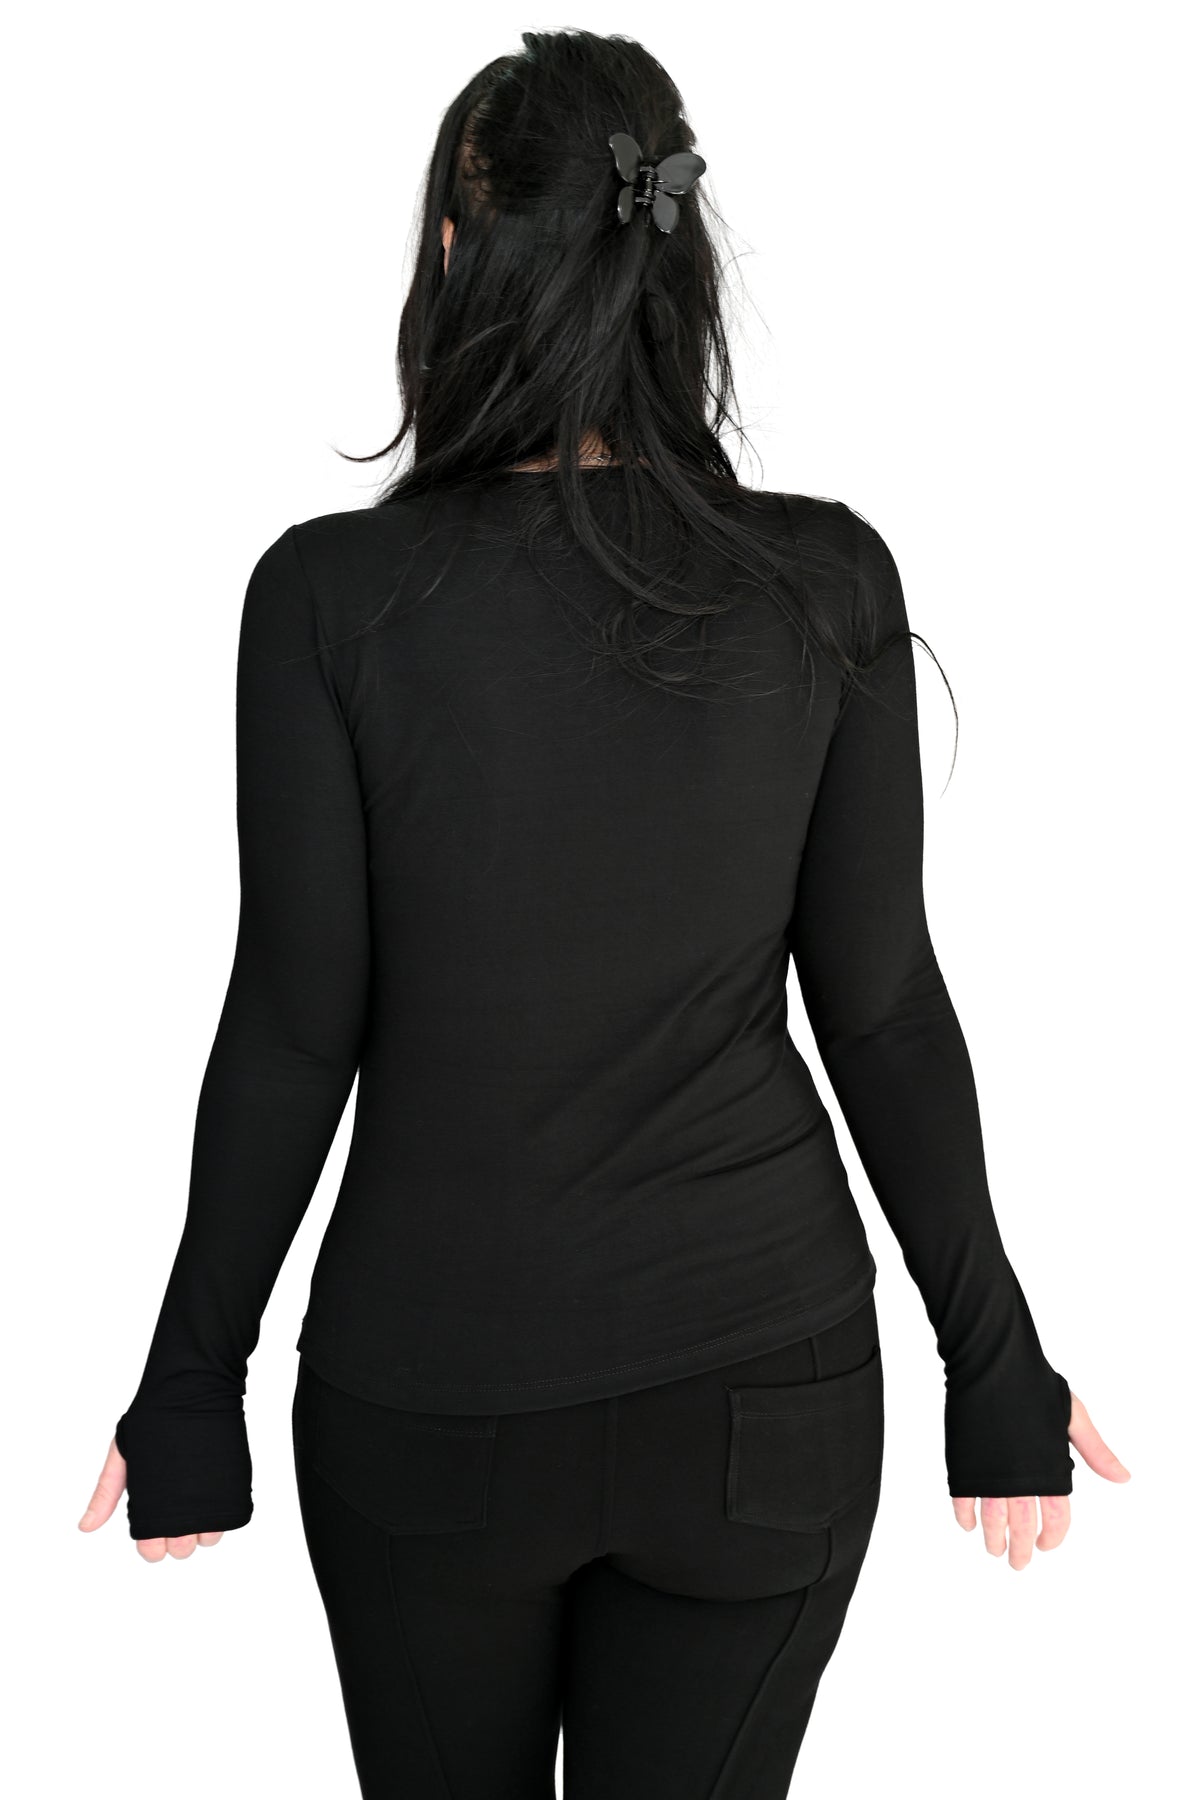 black full length long sleeve top with thumbholes